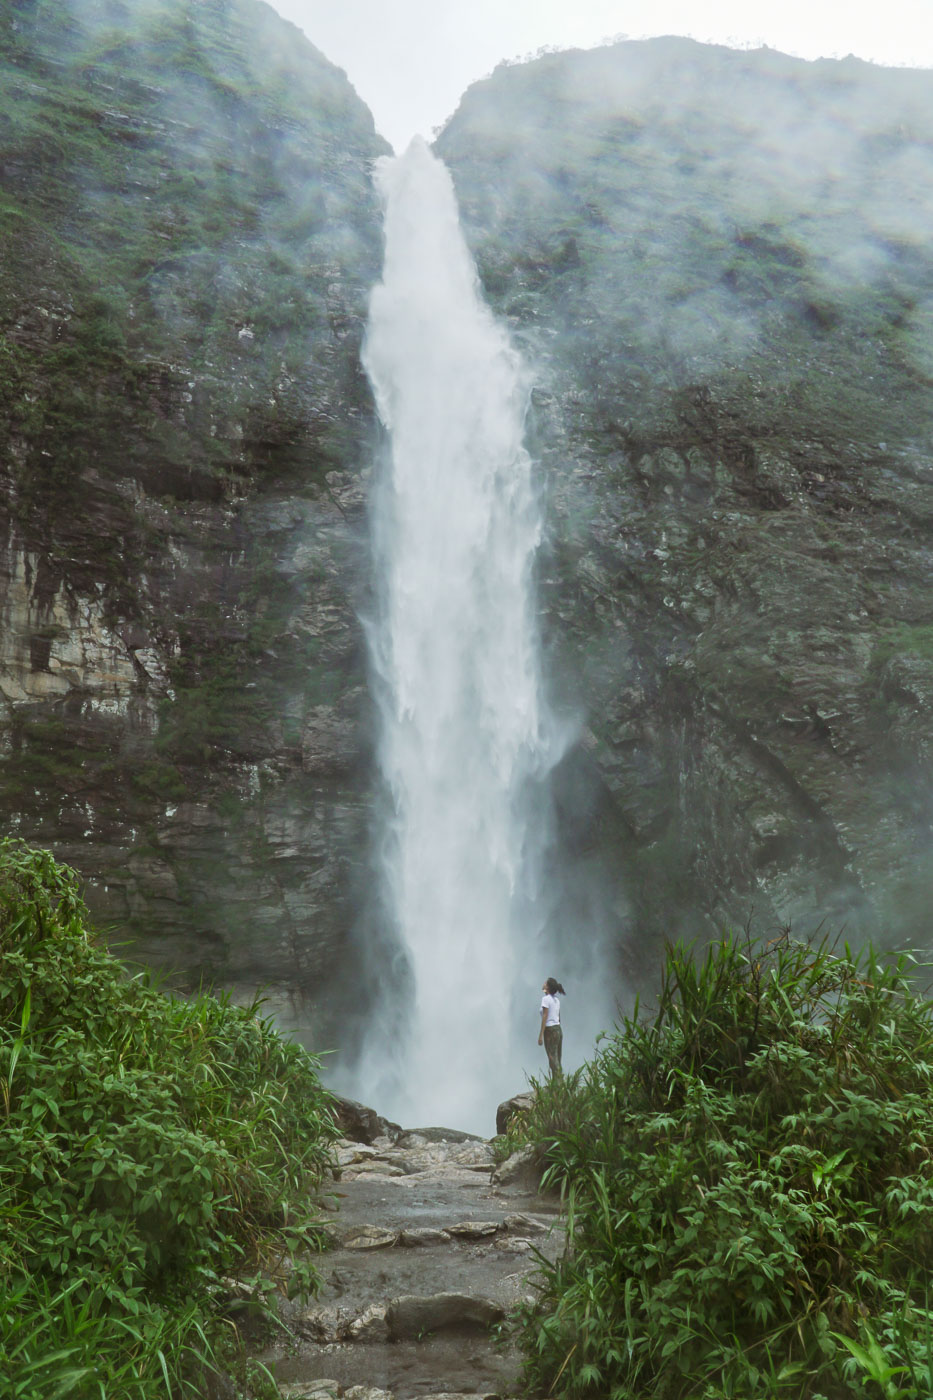 Fernanda in front of the massive Casca D'Anta Waterfall in Serra da Canastra Brazilian National Park